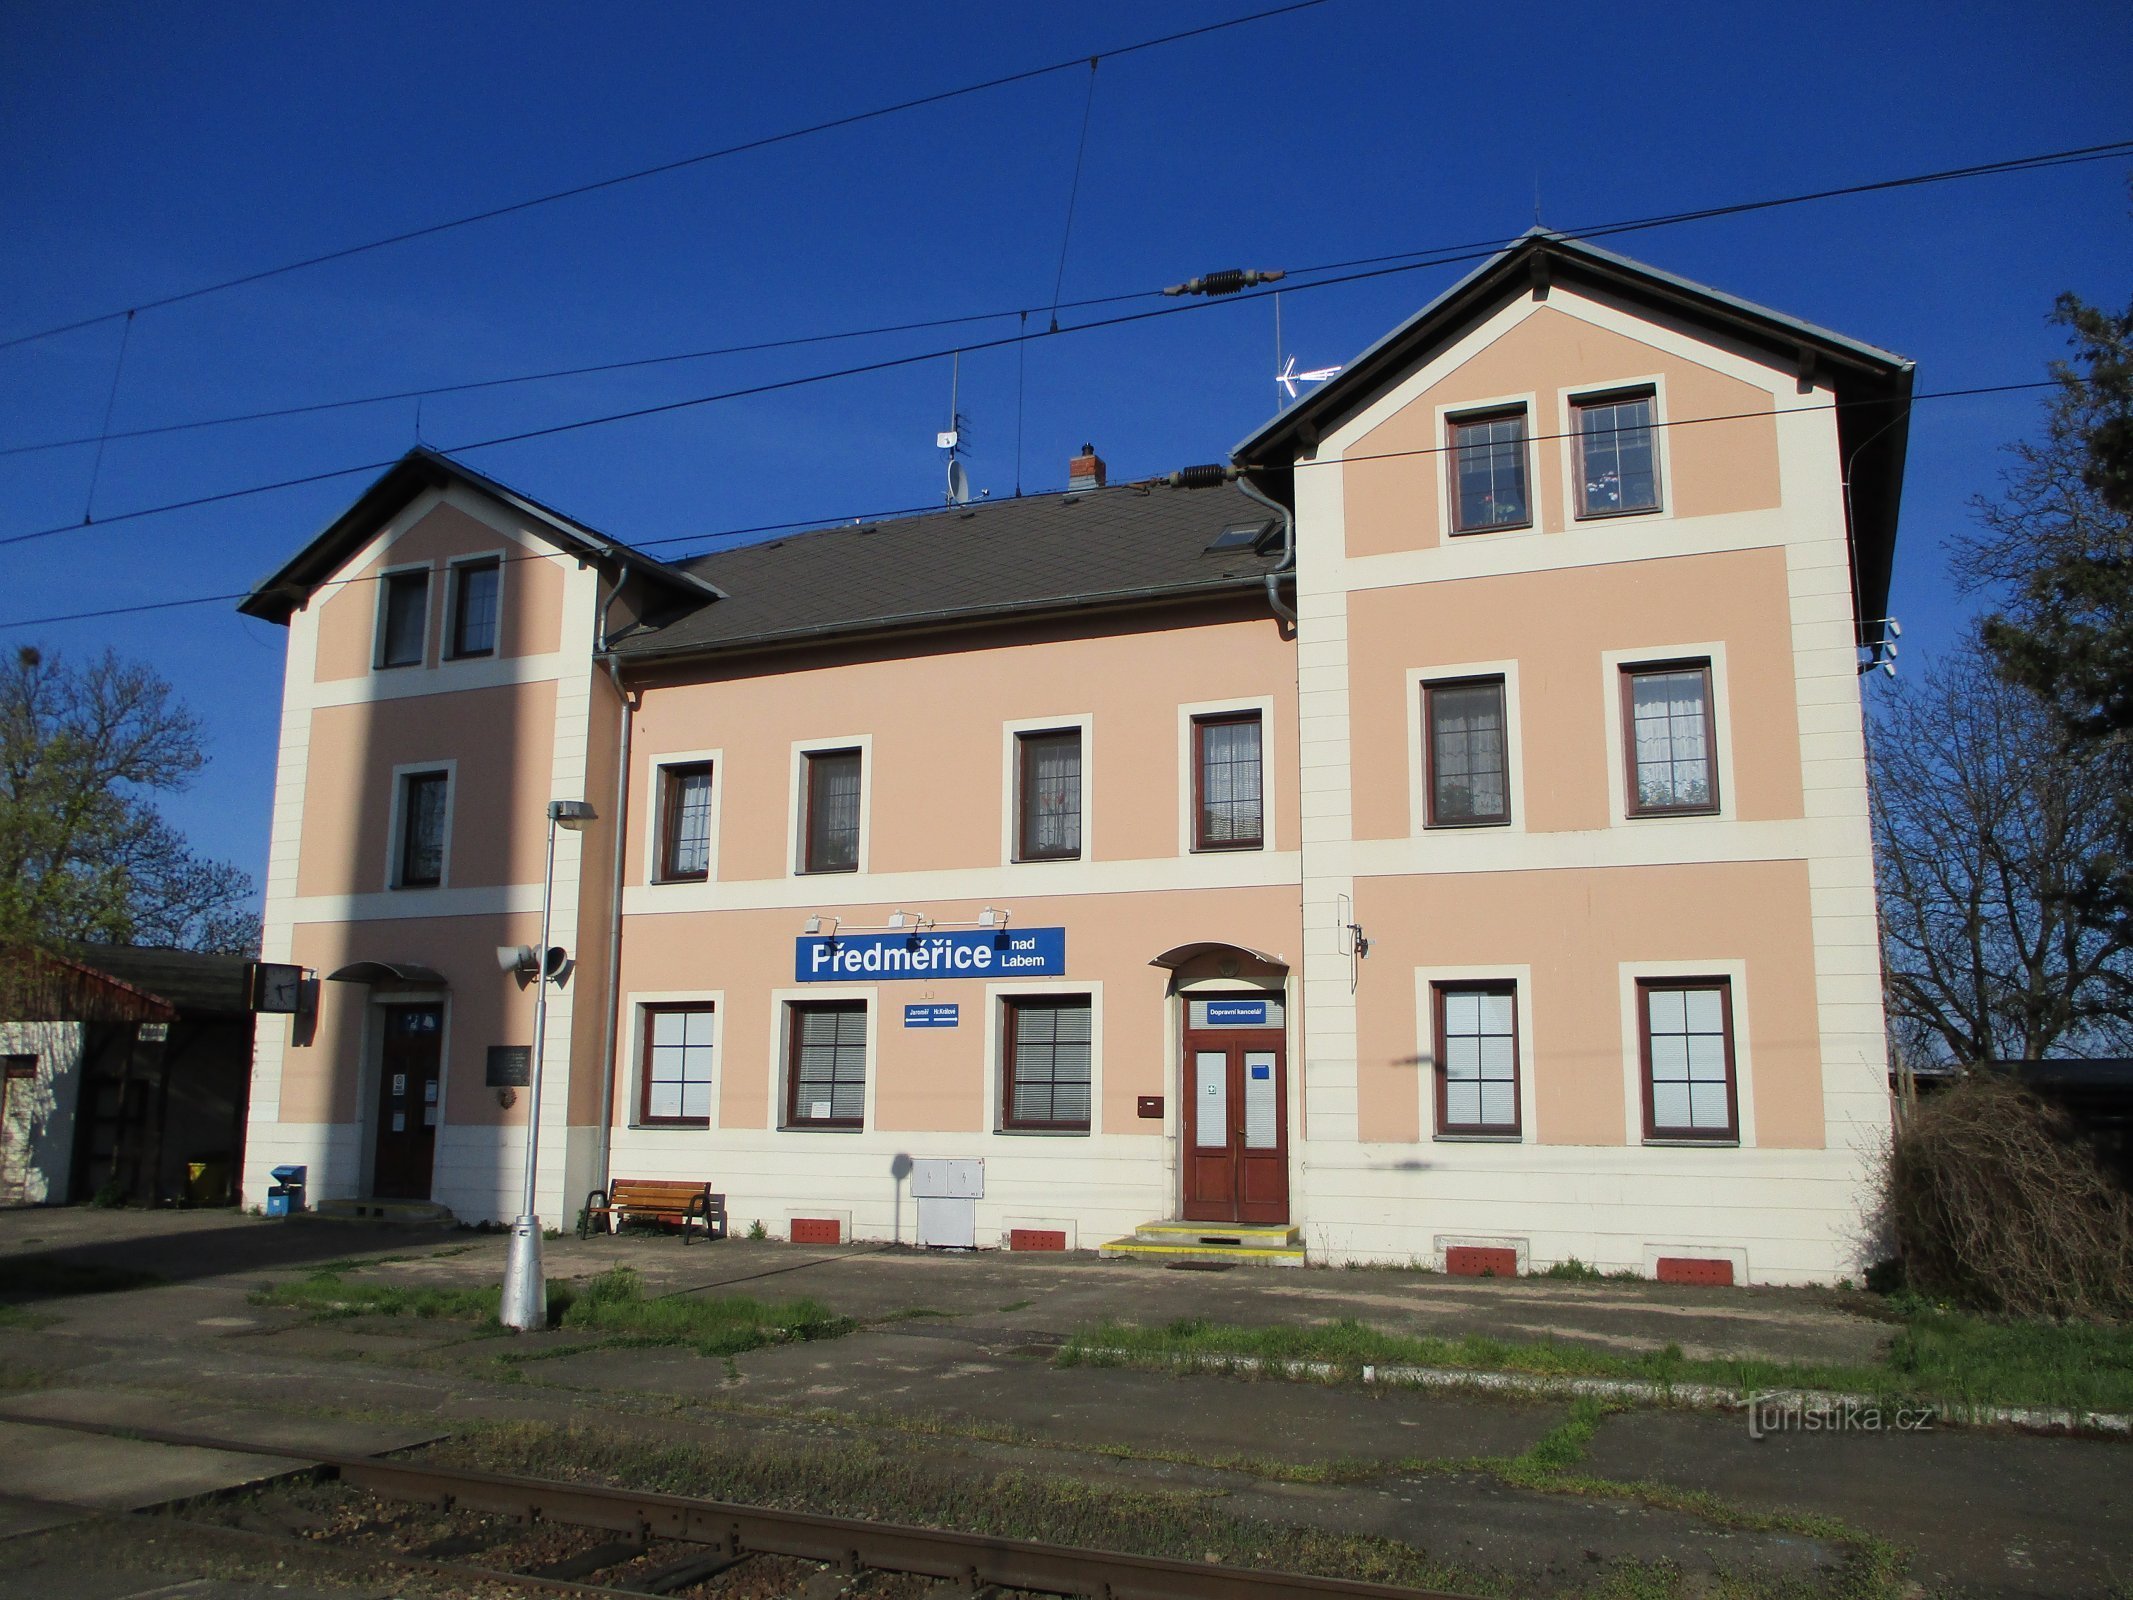 În Aleea nr. 130 (Předměřice nad Labem, 11.4.2020)